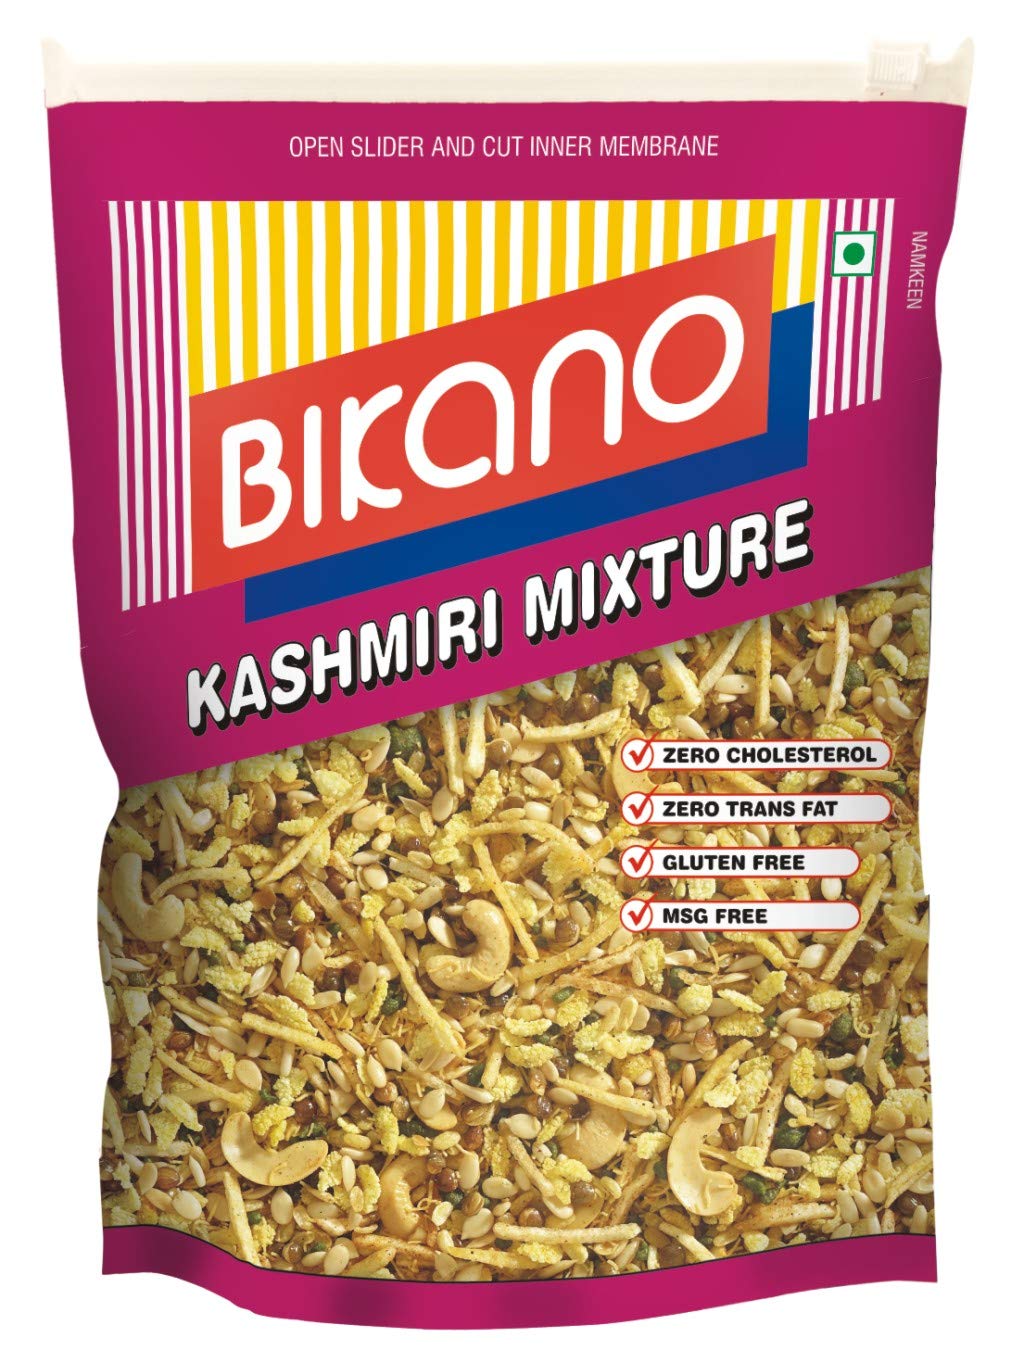 Bikano Kashmiri Mixture